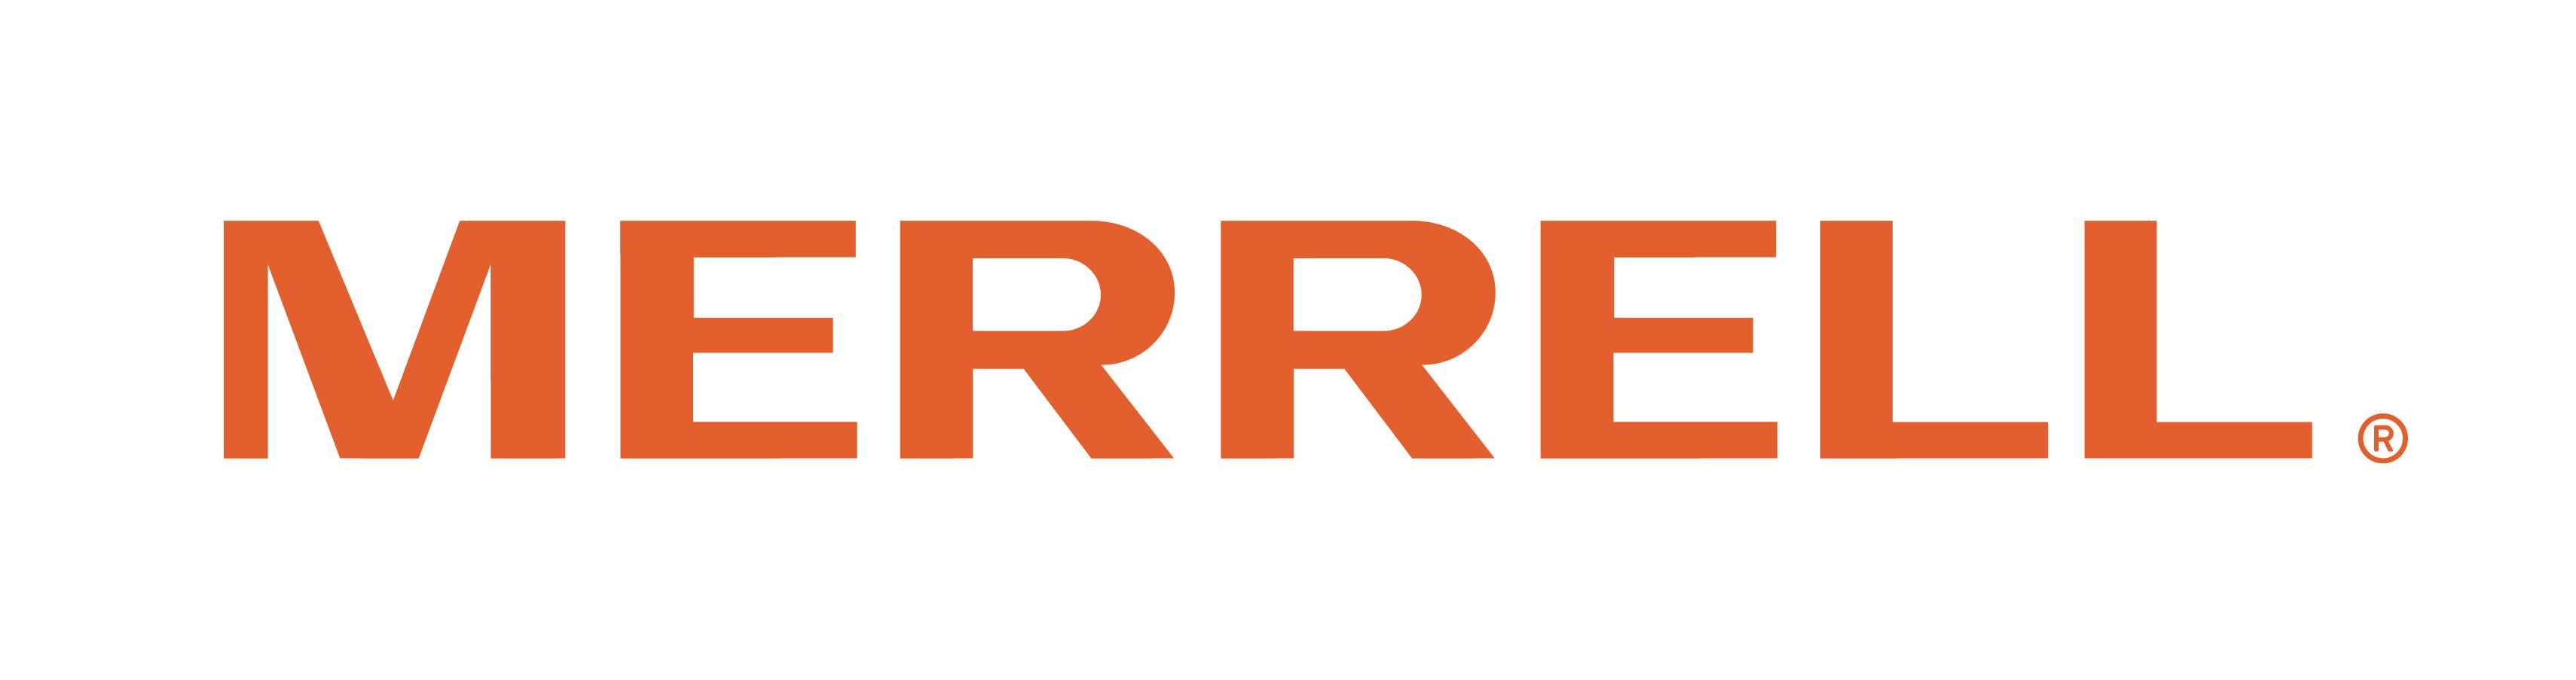 Merrell logo orange on white